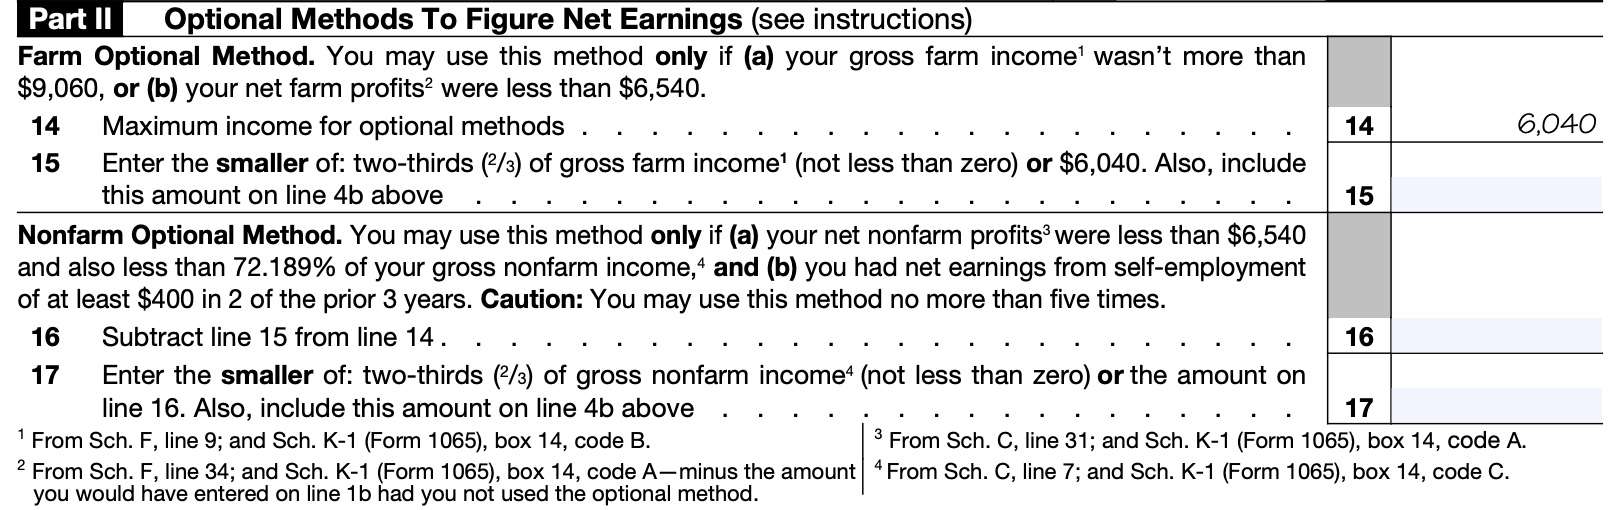 Schedule SE Part II: Optional methods to figure net earnings